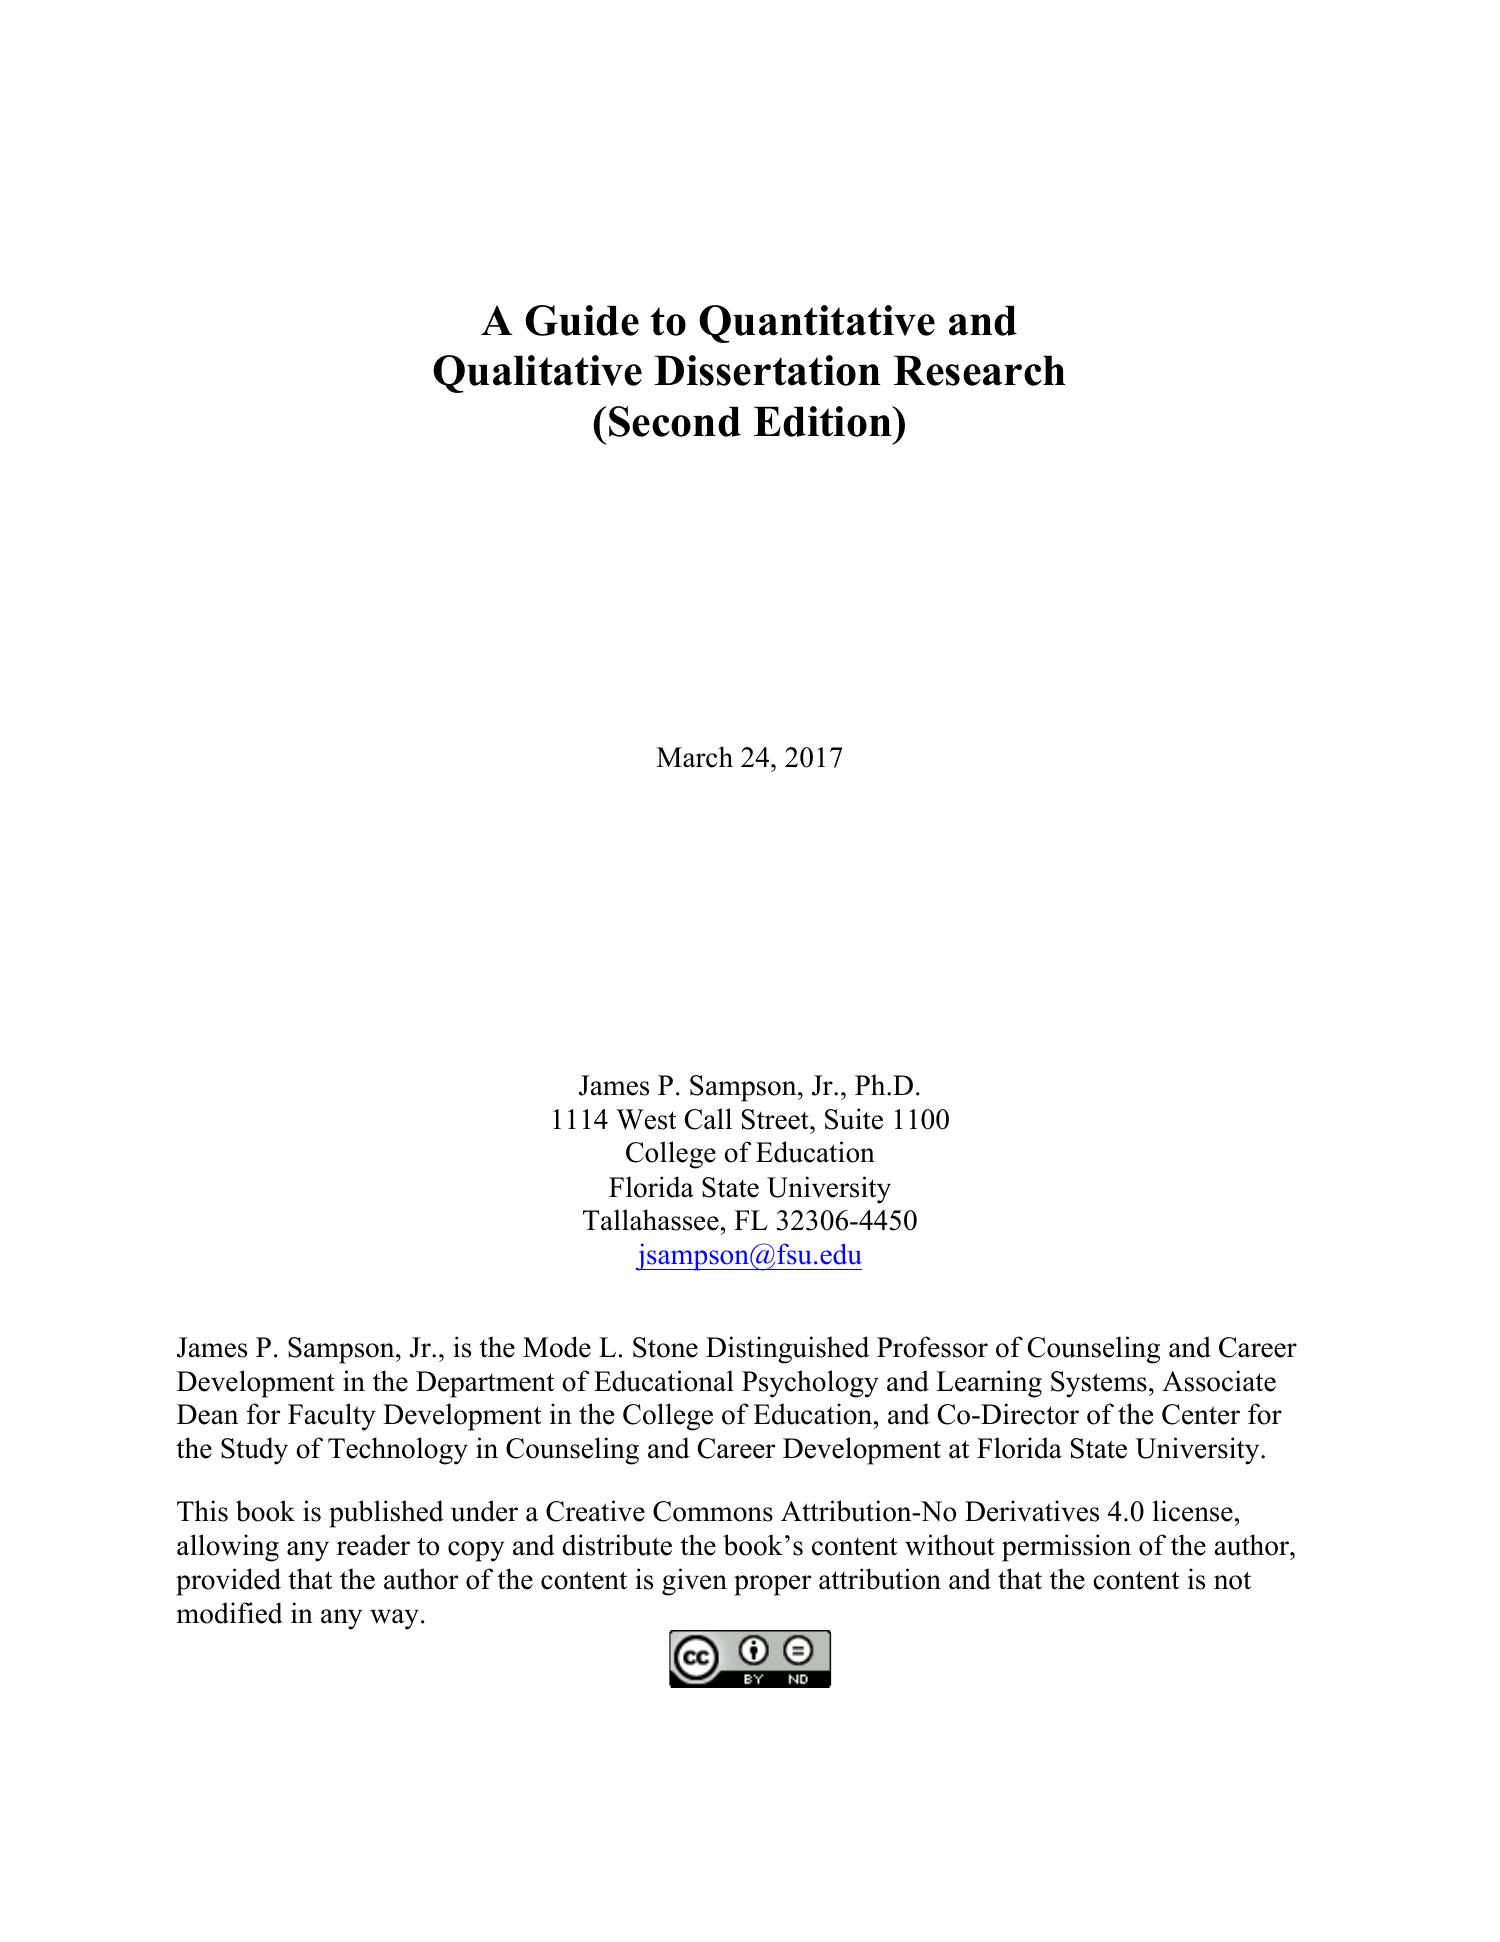 dissertation qualitative methodology example pdf